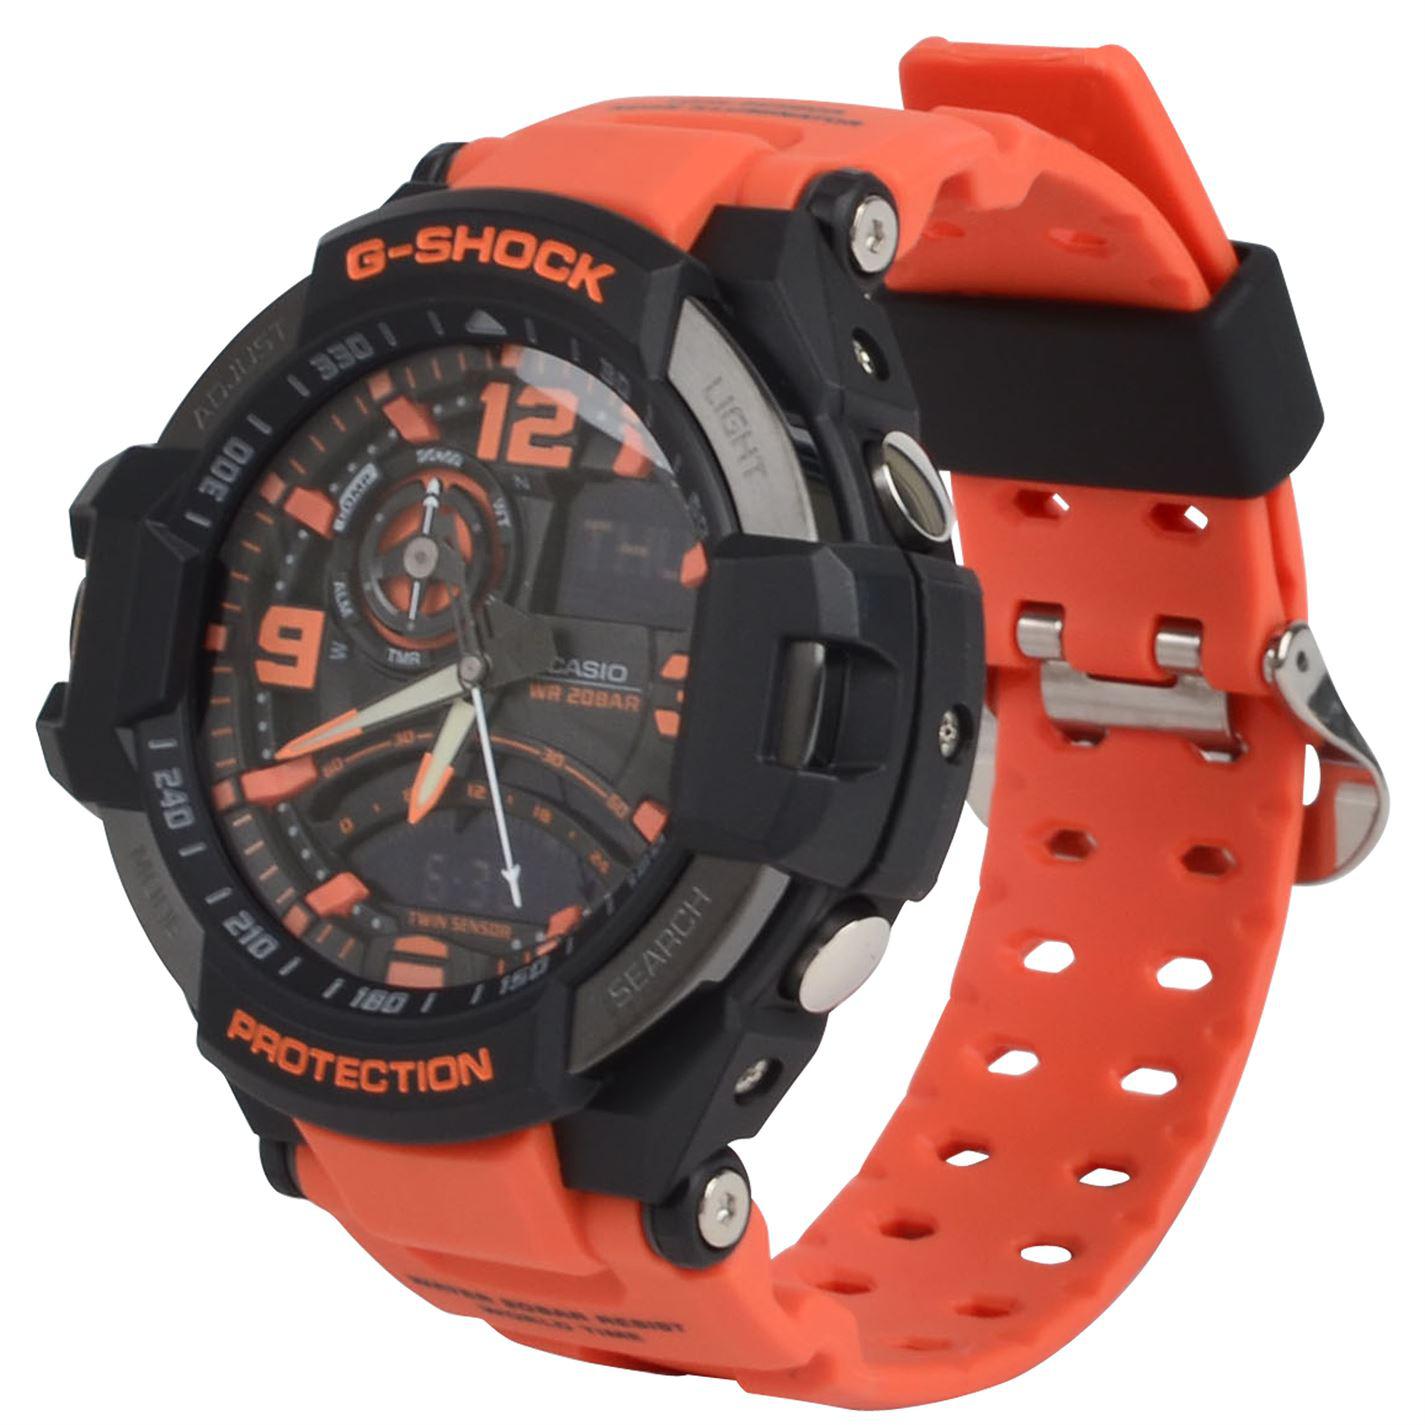 Lyst - G-Shock Watch in Orange for Men